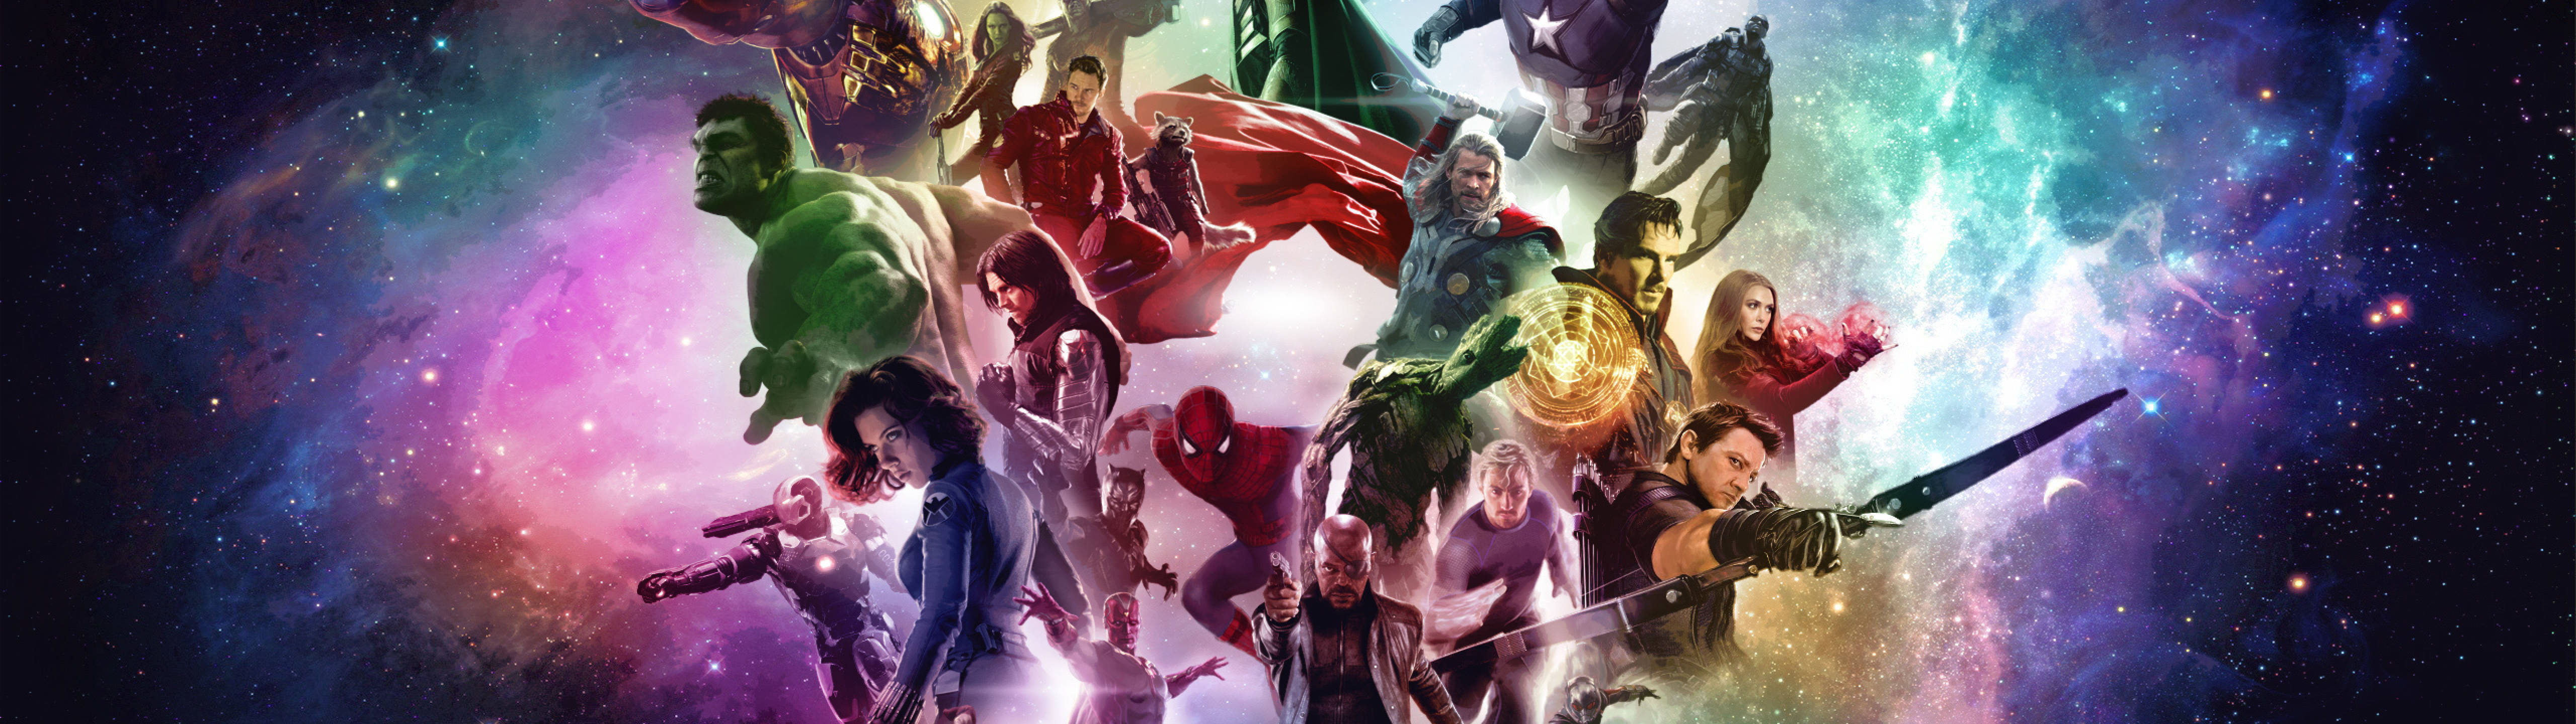 Marvel Heroes Together 5120 X 1440 Wallpaper